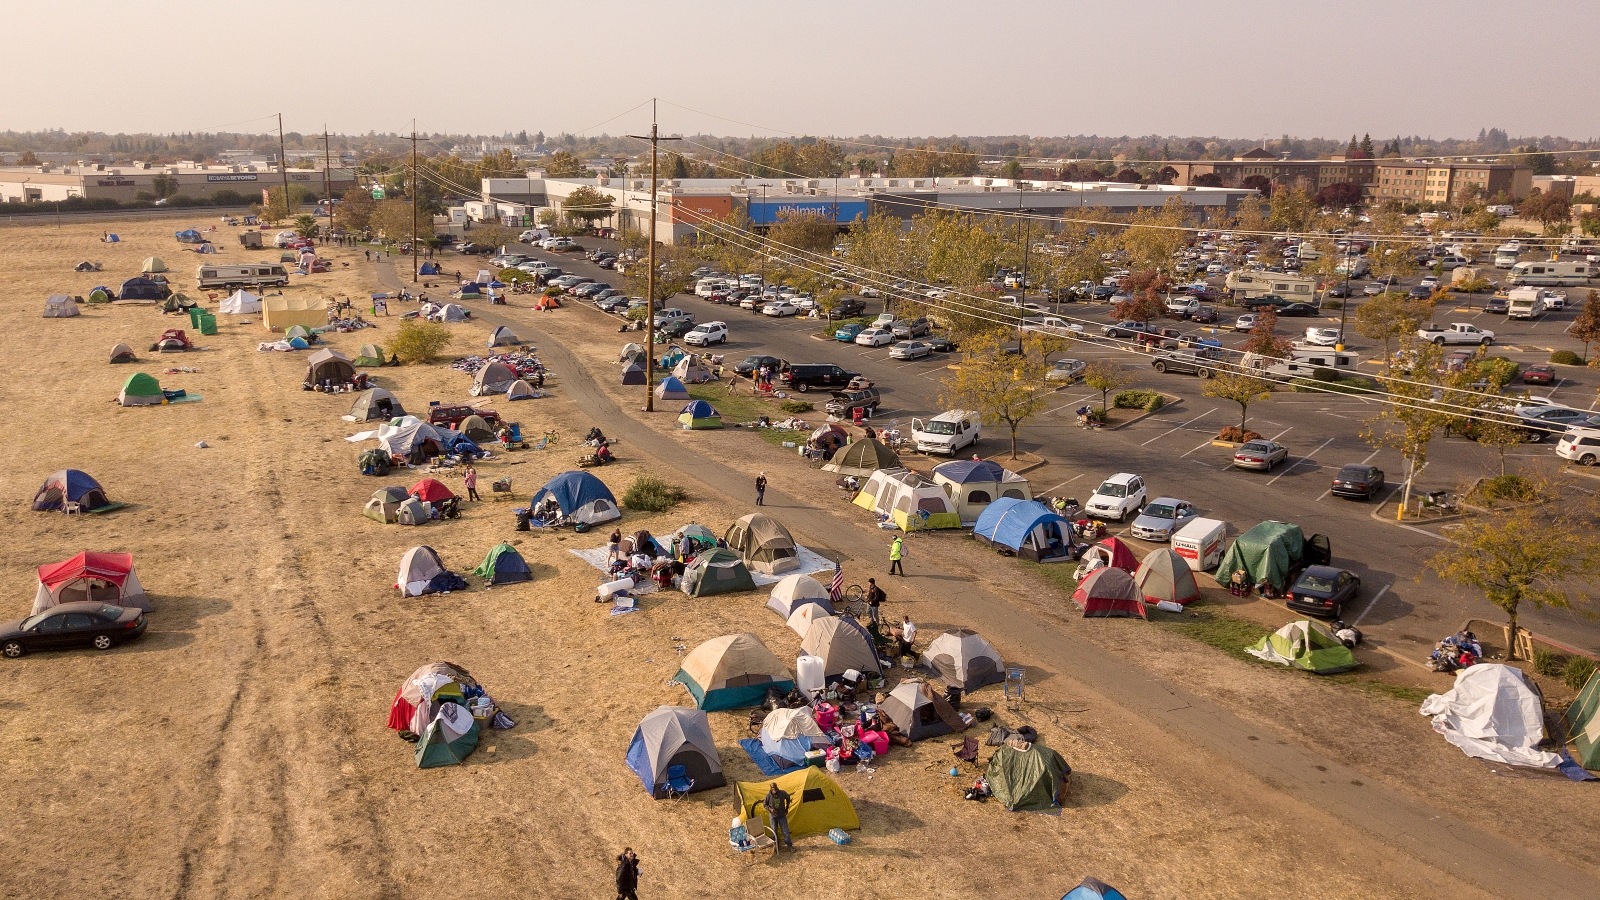 A evacuee encampment at a Walmart parking lot in Chico, California.